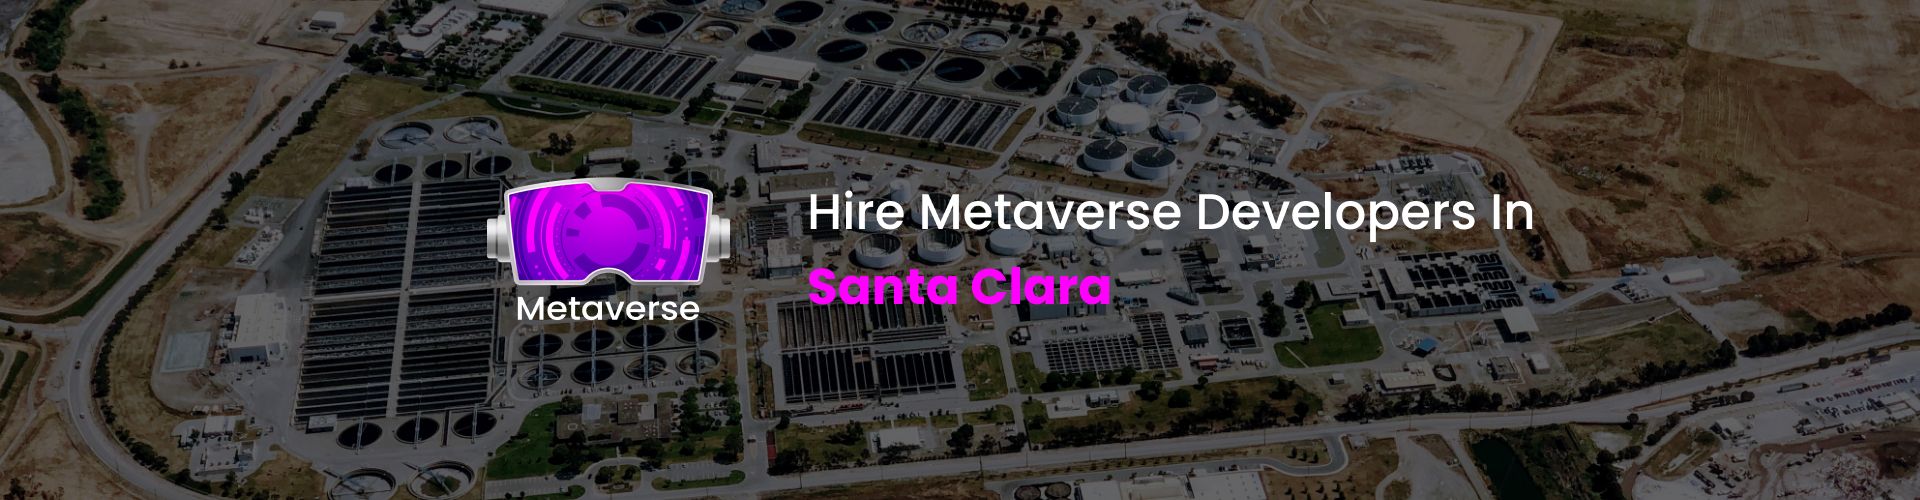 hire metaverse developers in santa clara